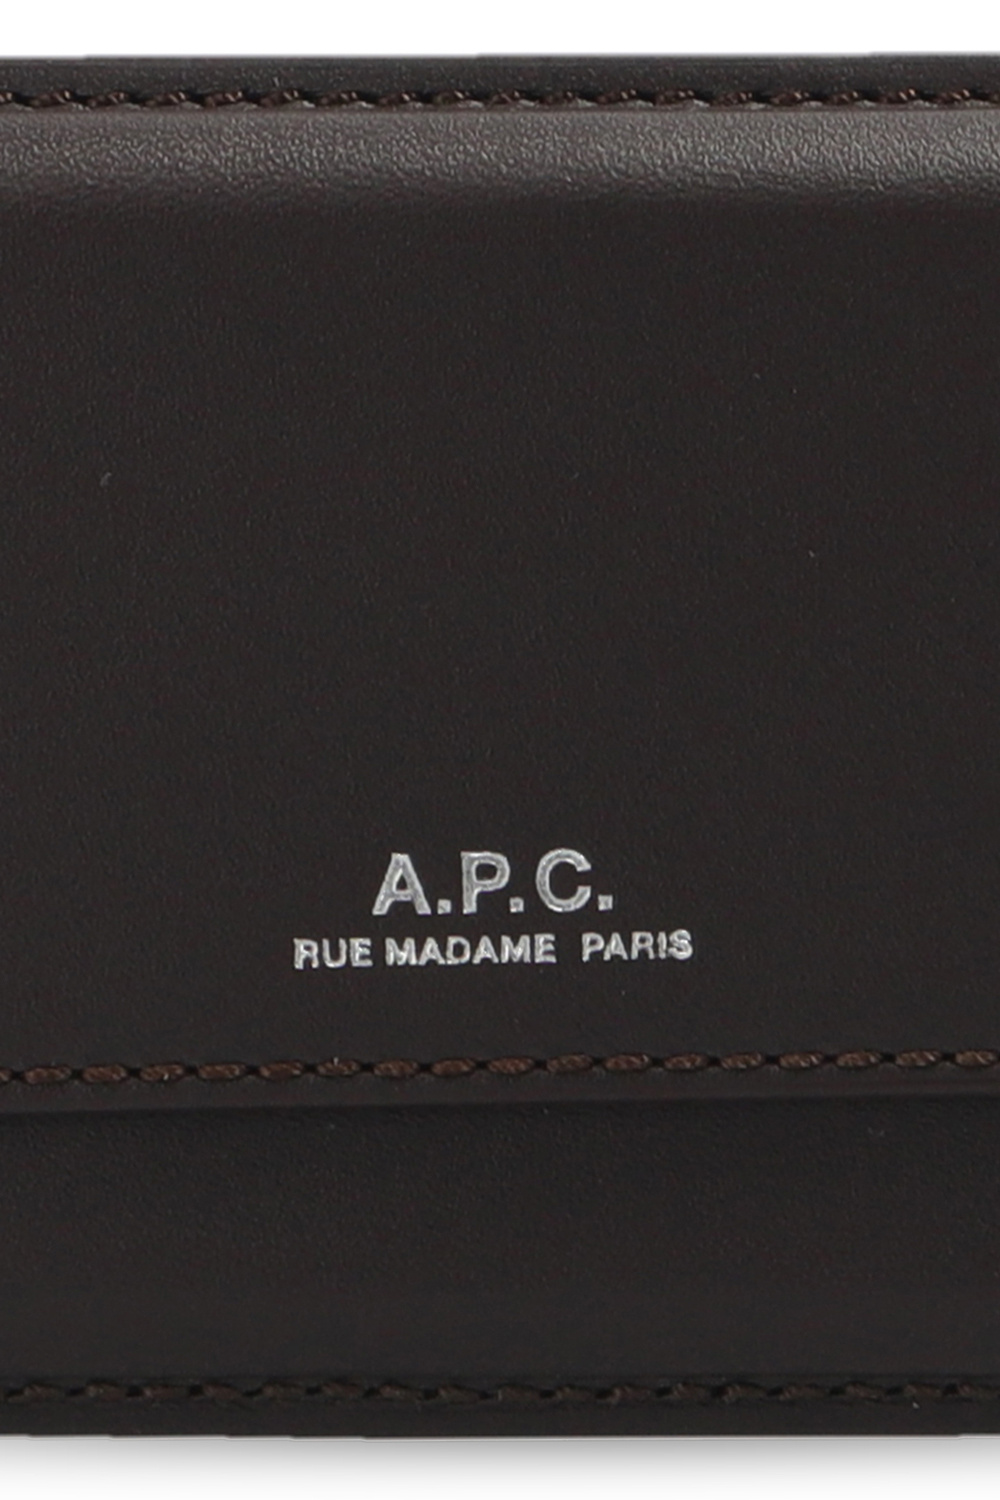 A.P.C. Card holder